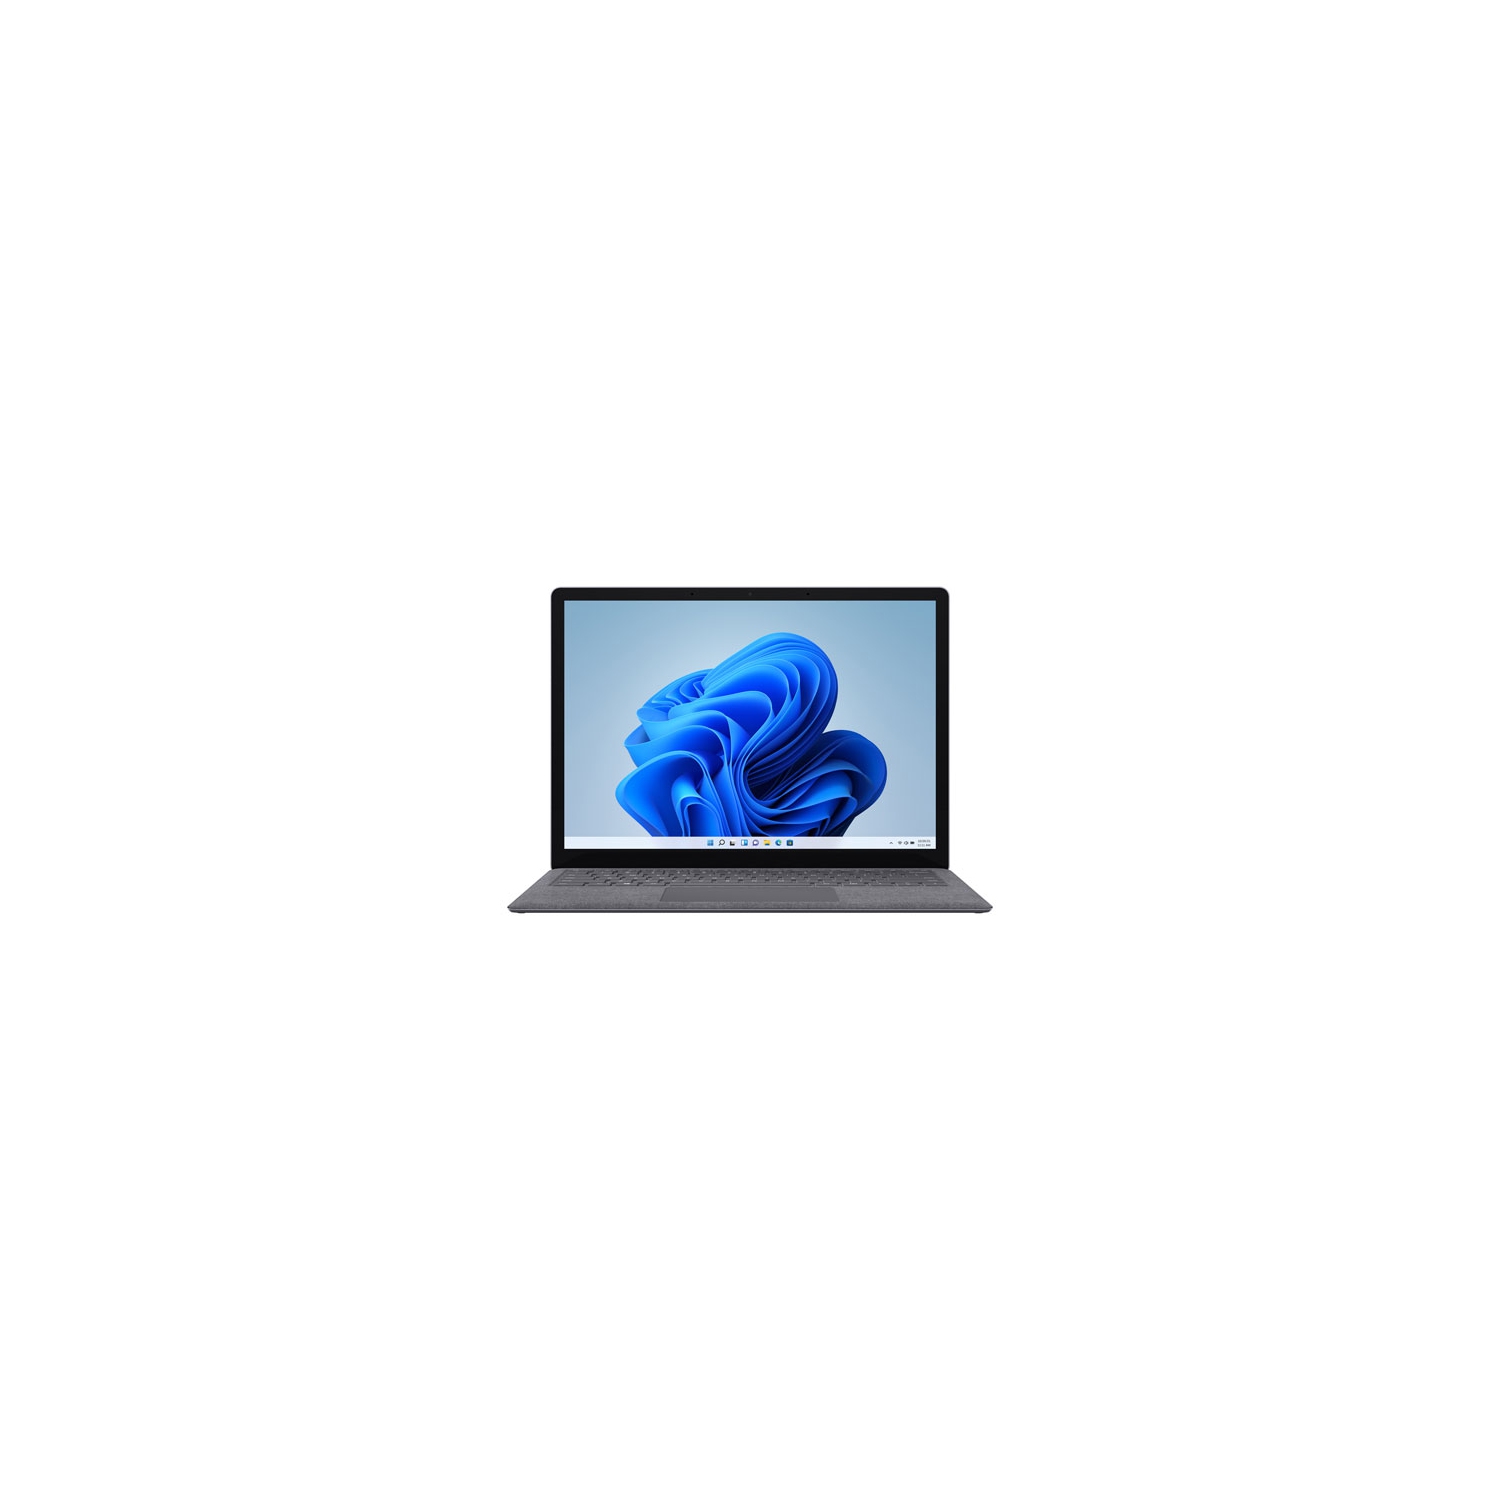 Refurbished (Fair) - Microsoft Surface Laptop 4 13.5" - Platinum (AMD Ryzen 5 4680U/256GB SSD/8GB RAM) - Eng